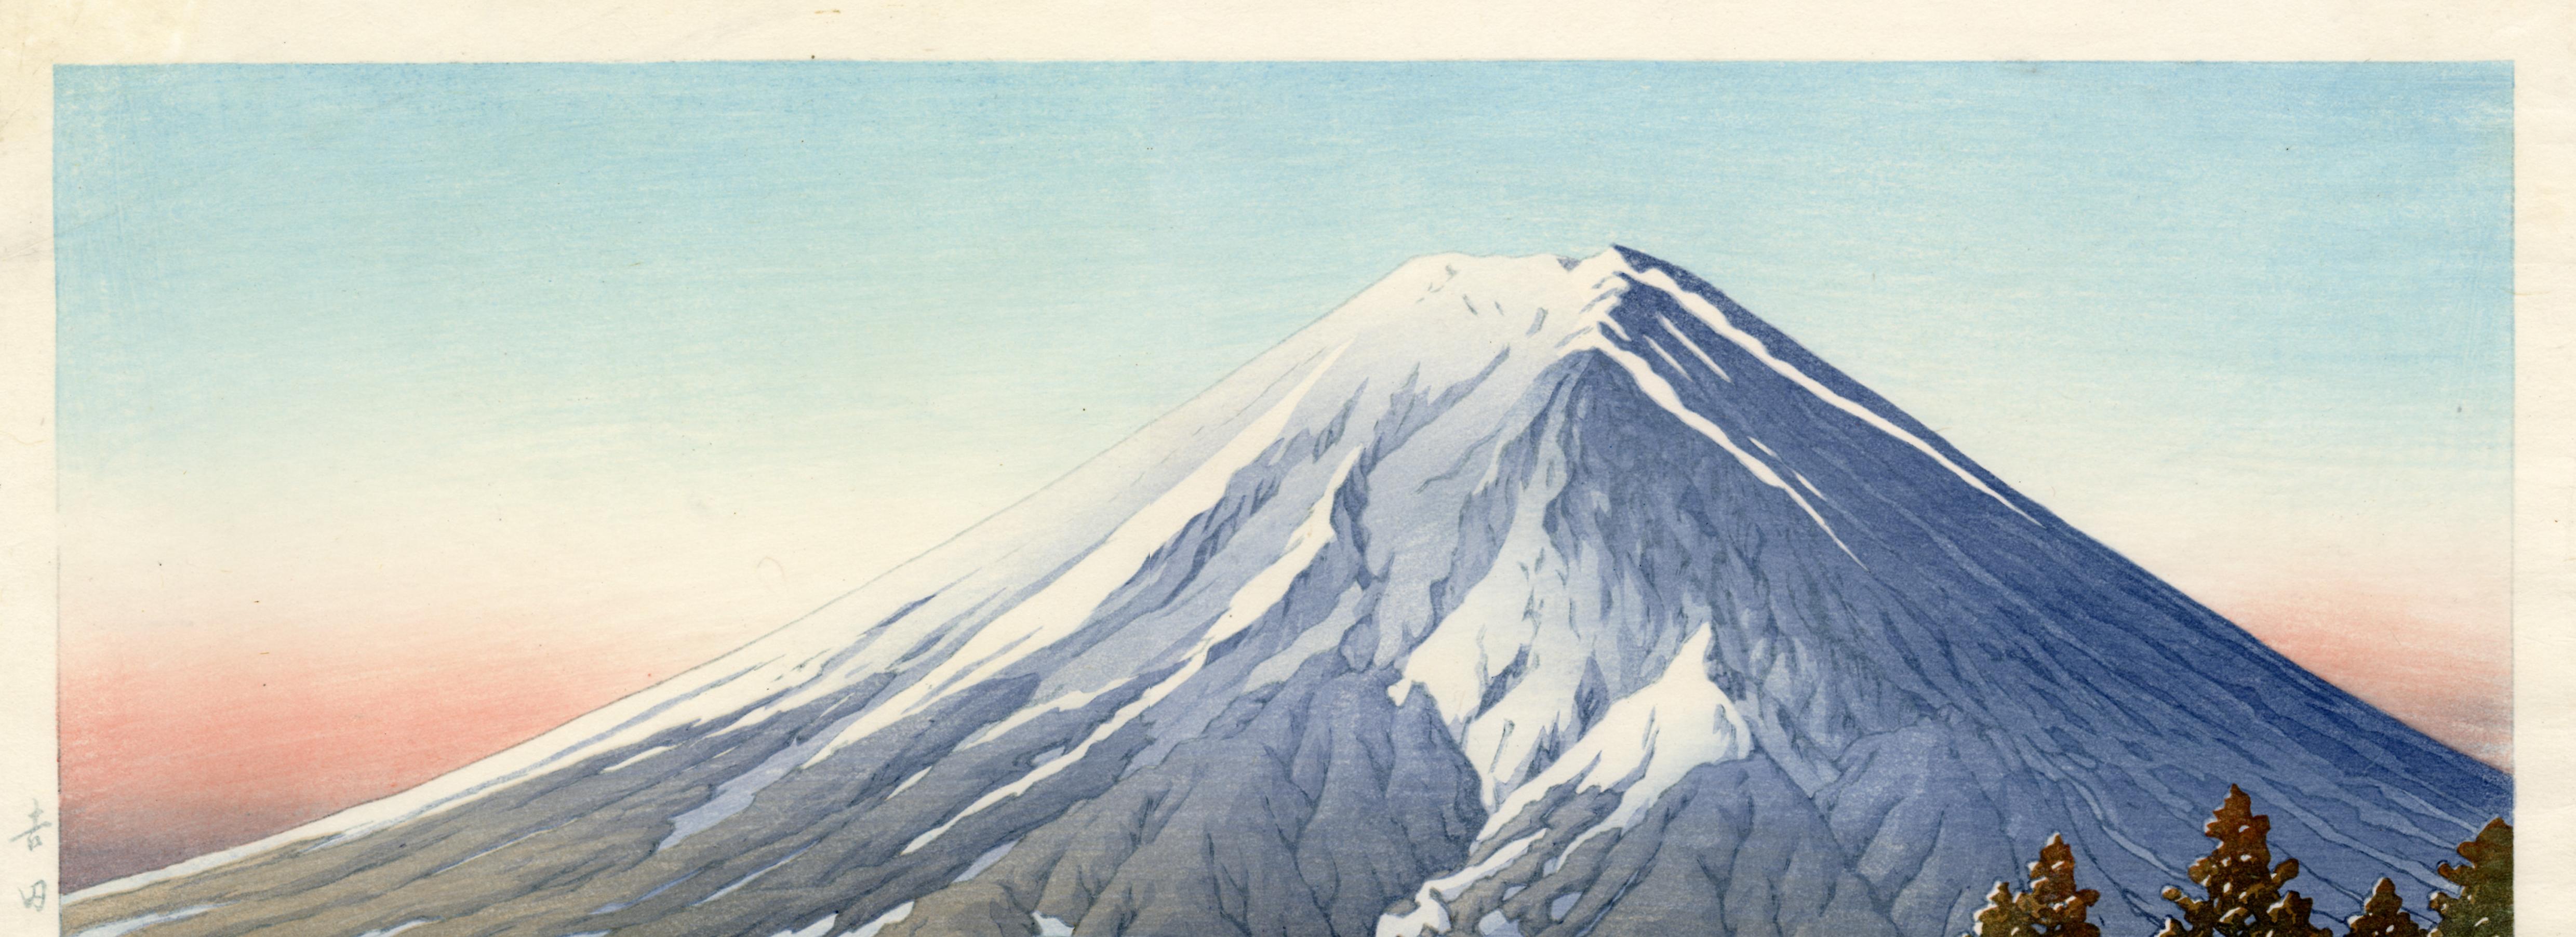 Mount Fuji After a Snowfall - Gray Landscape Print by Kawase Hasui